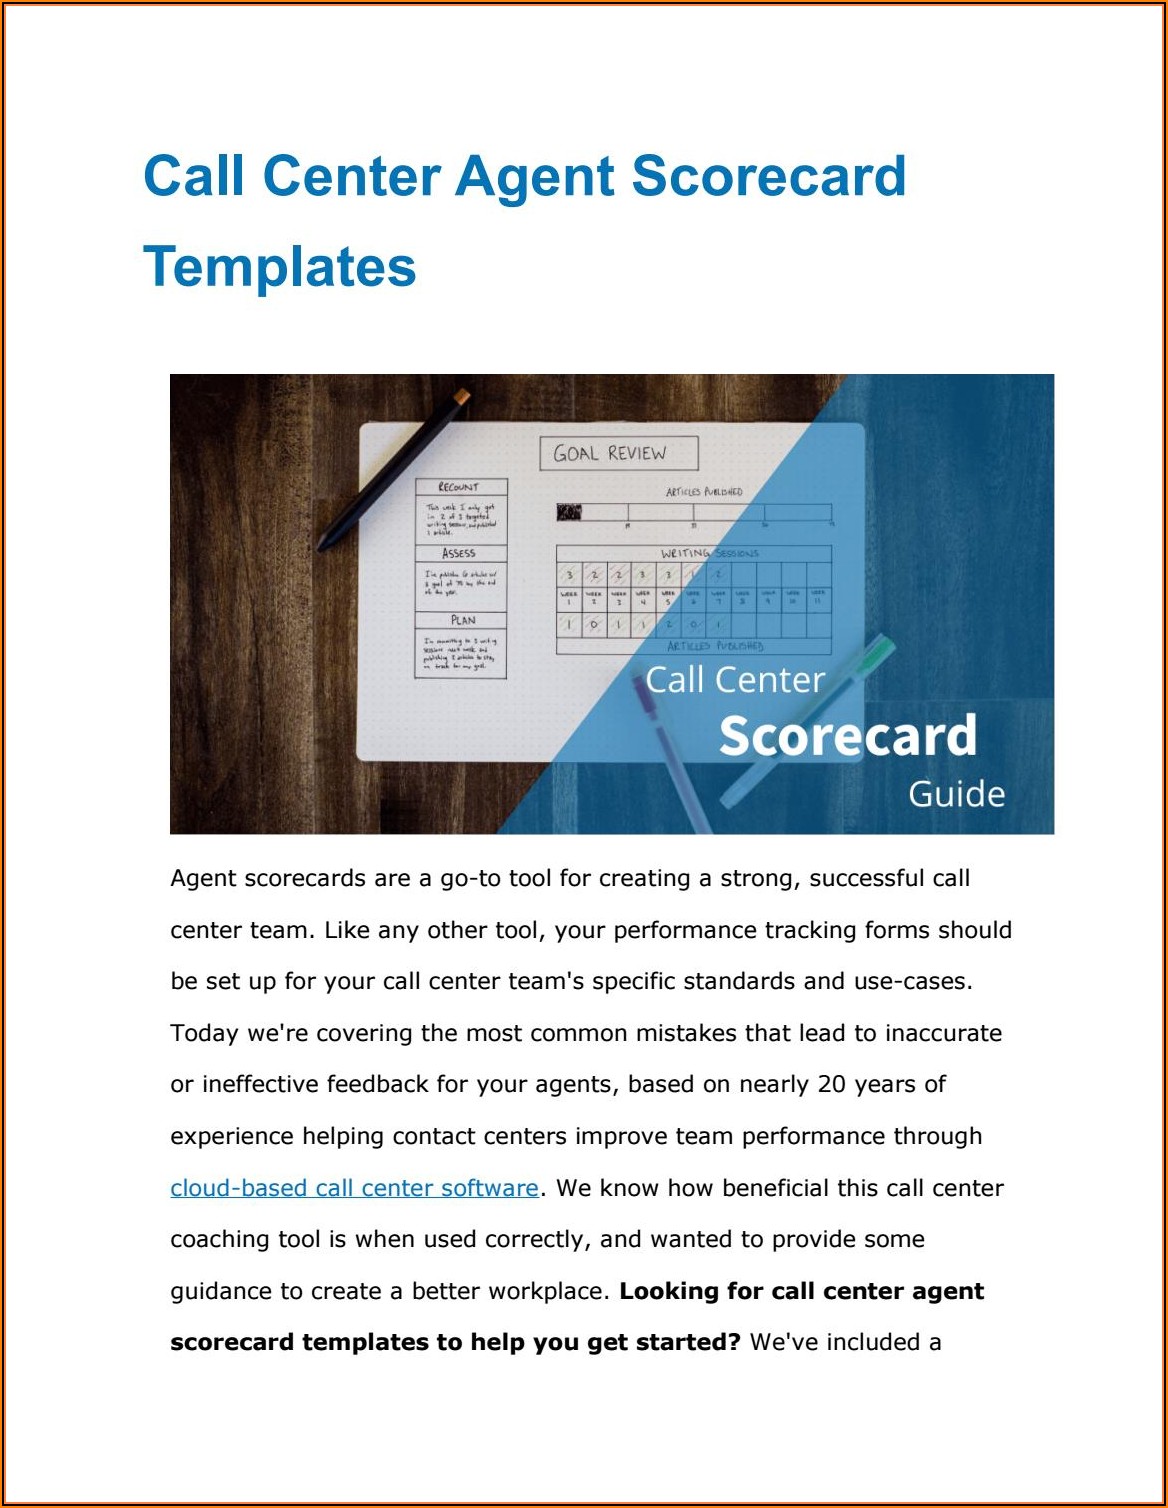 Call Center Agent Scorecard Template